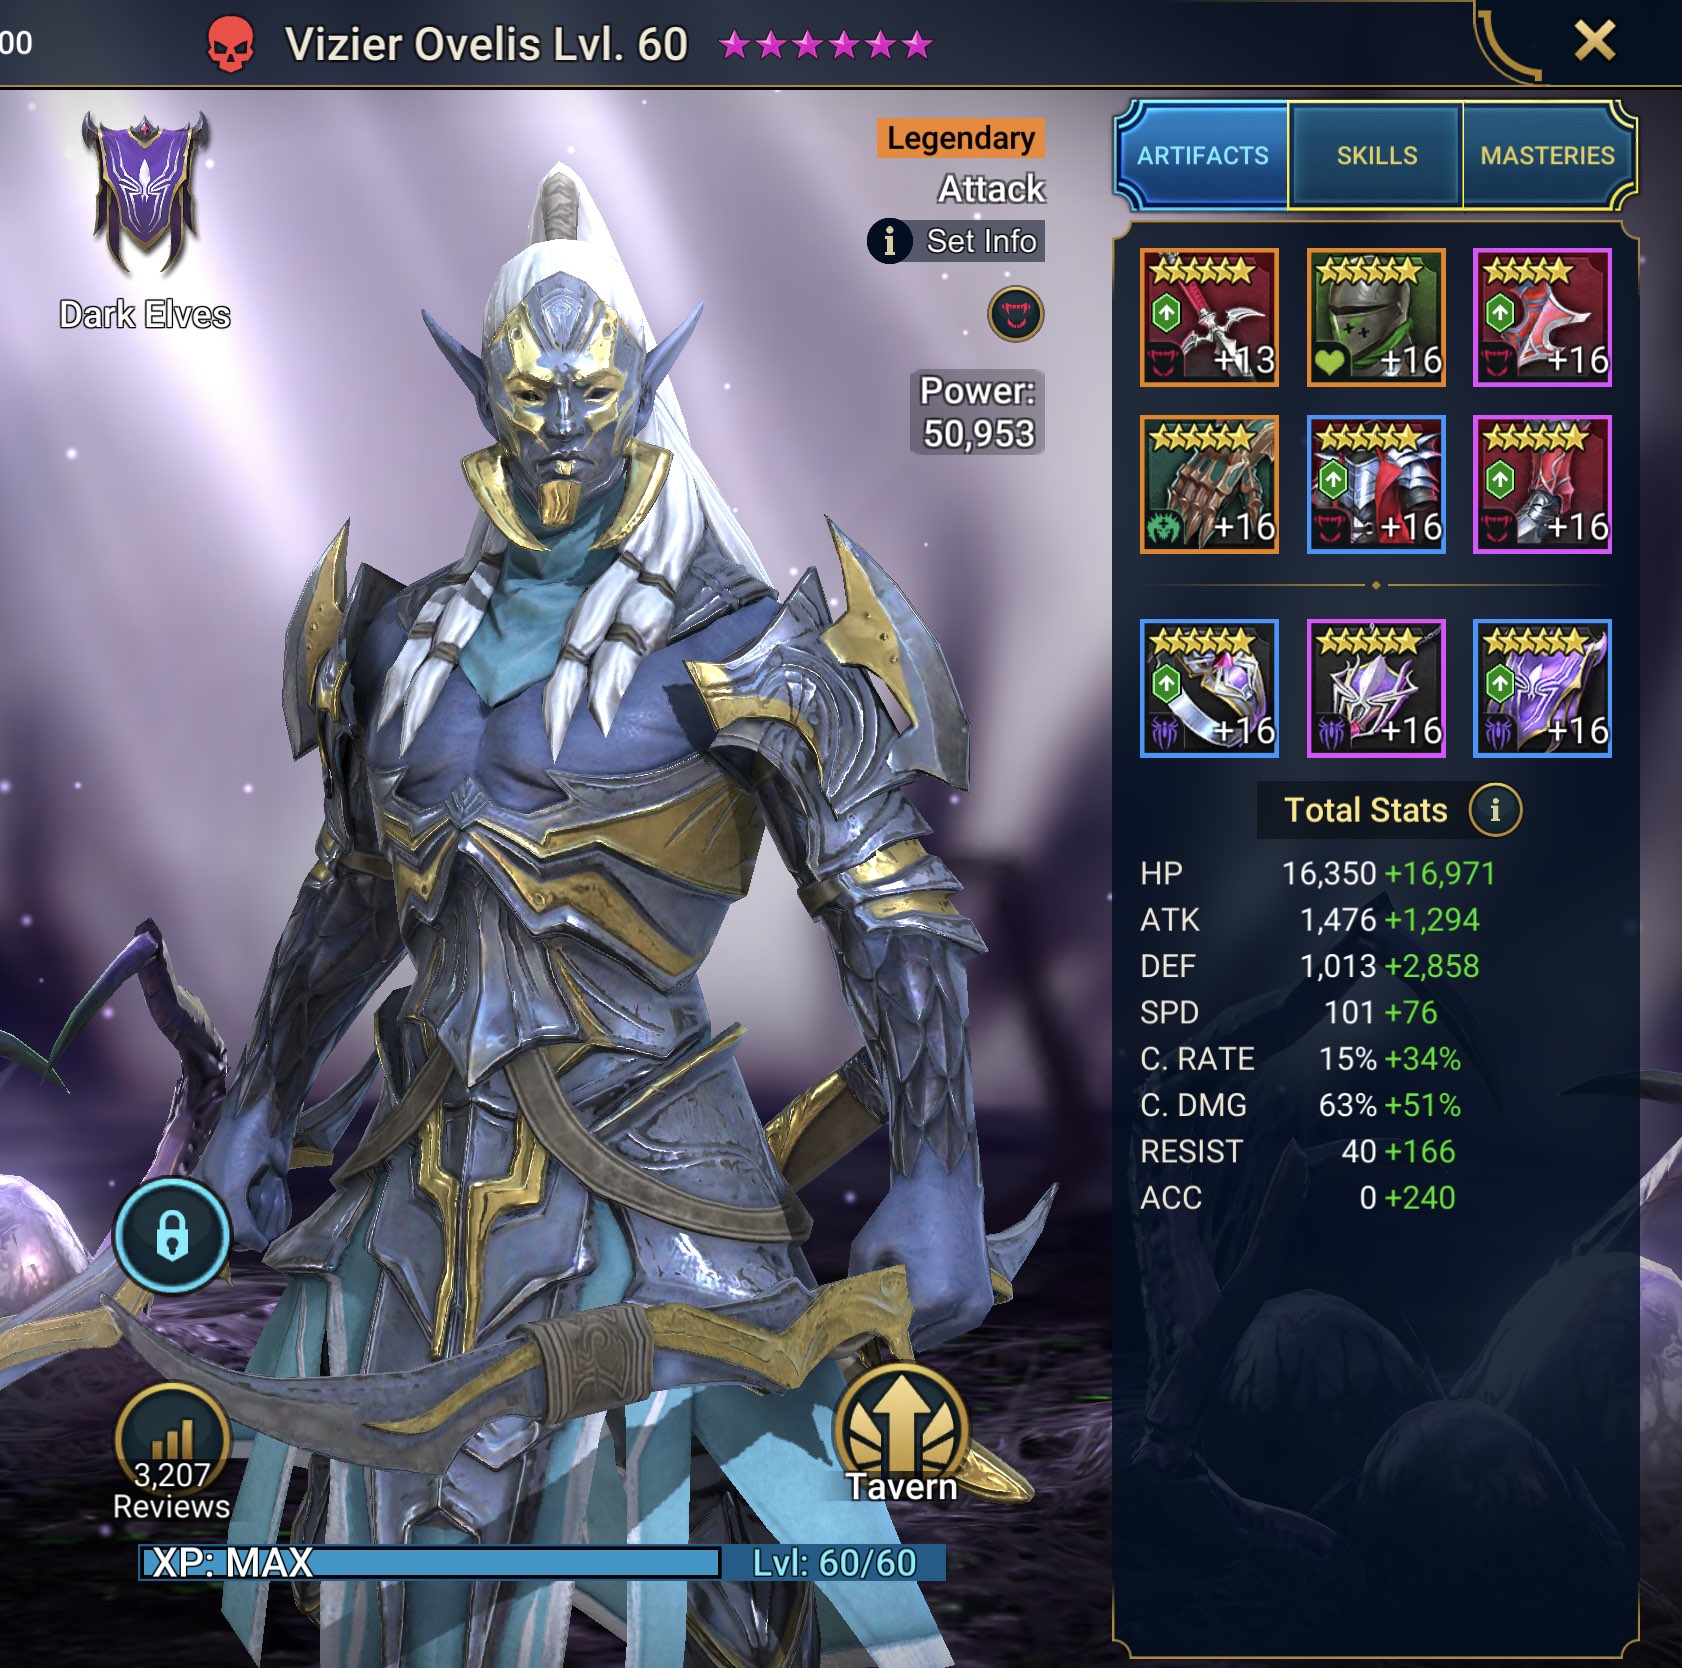 Vizier Ovelis clan boss gear and stats